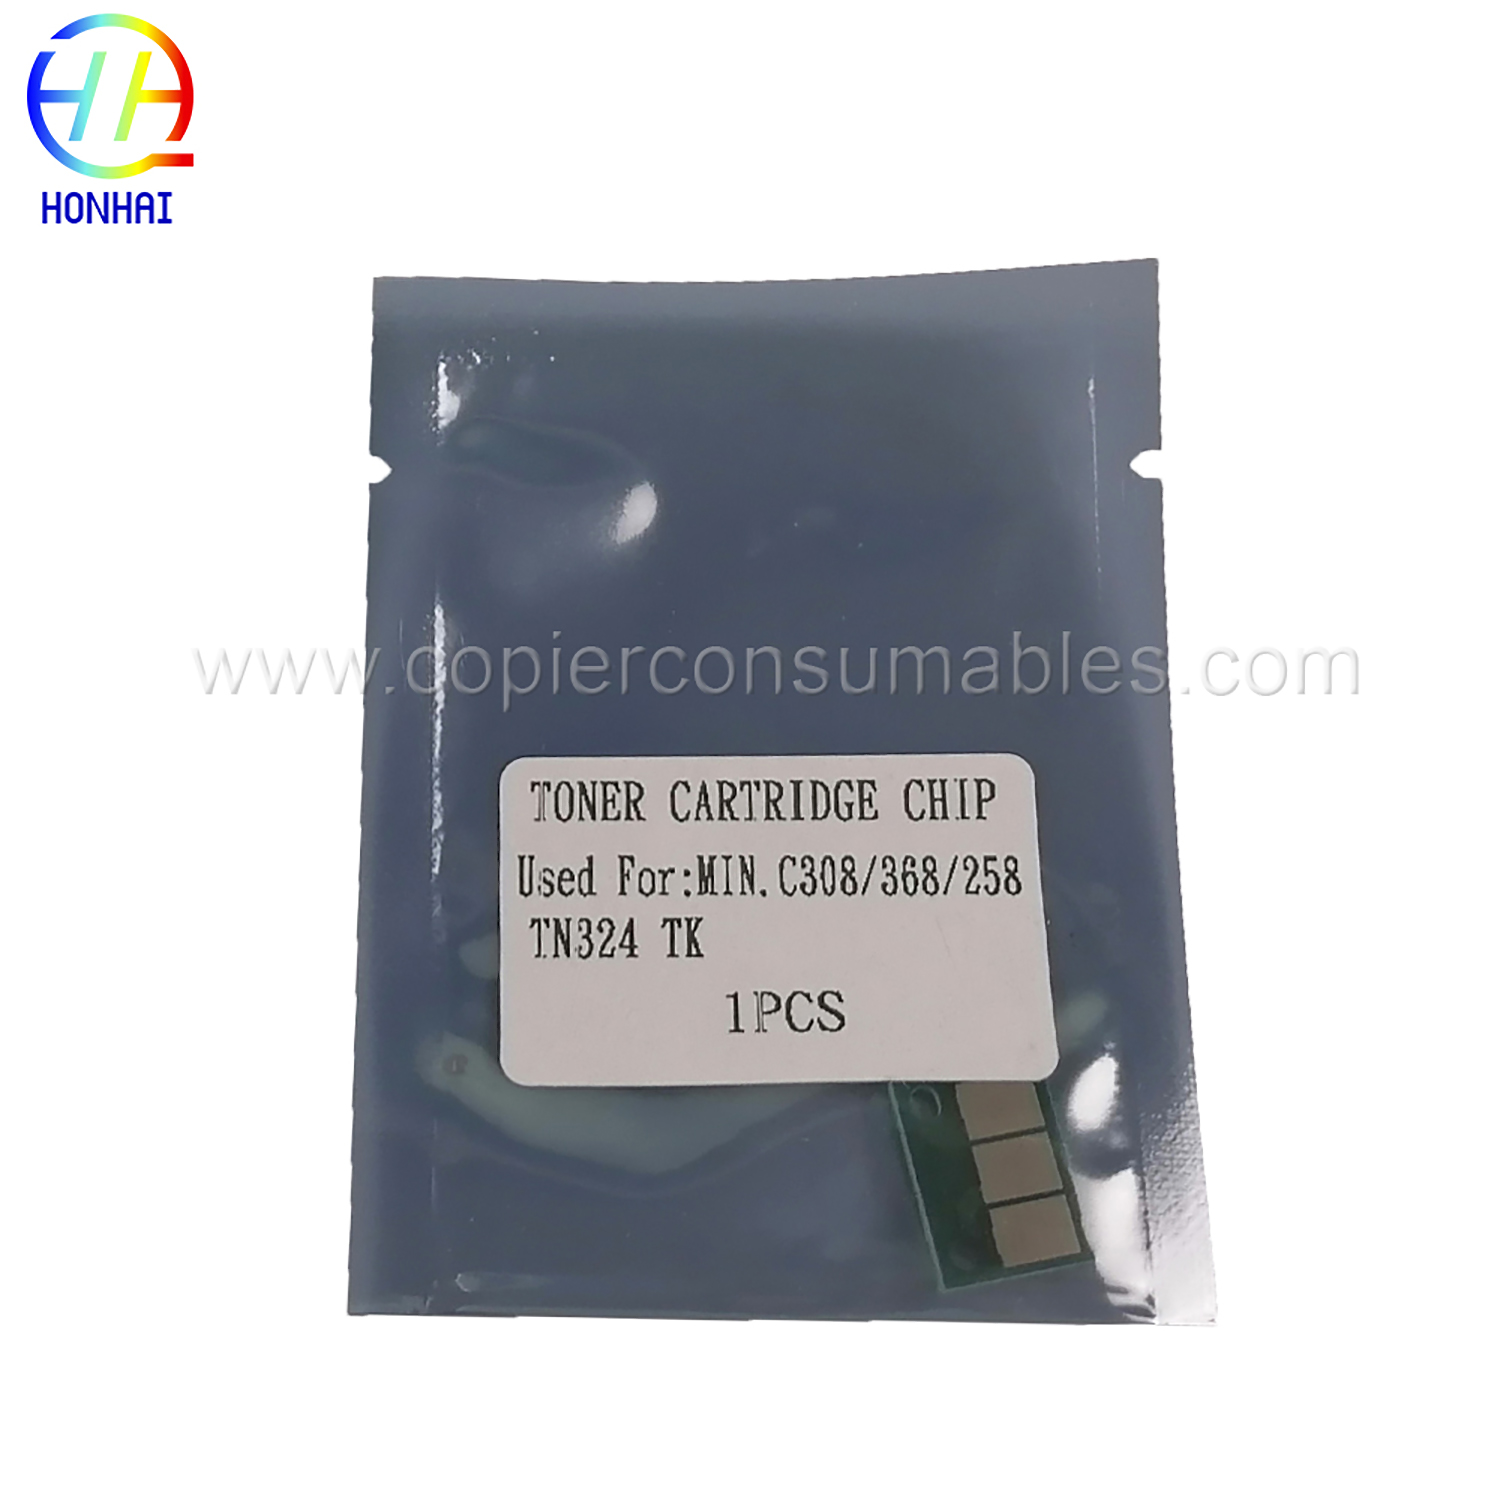 I-Toner Chip ye-Konica Minolta Bhc 258 308 368 TN324